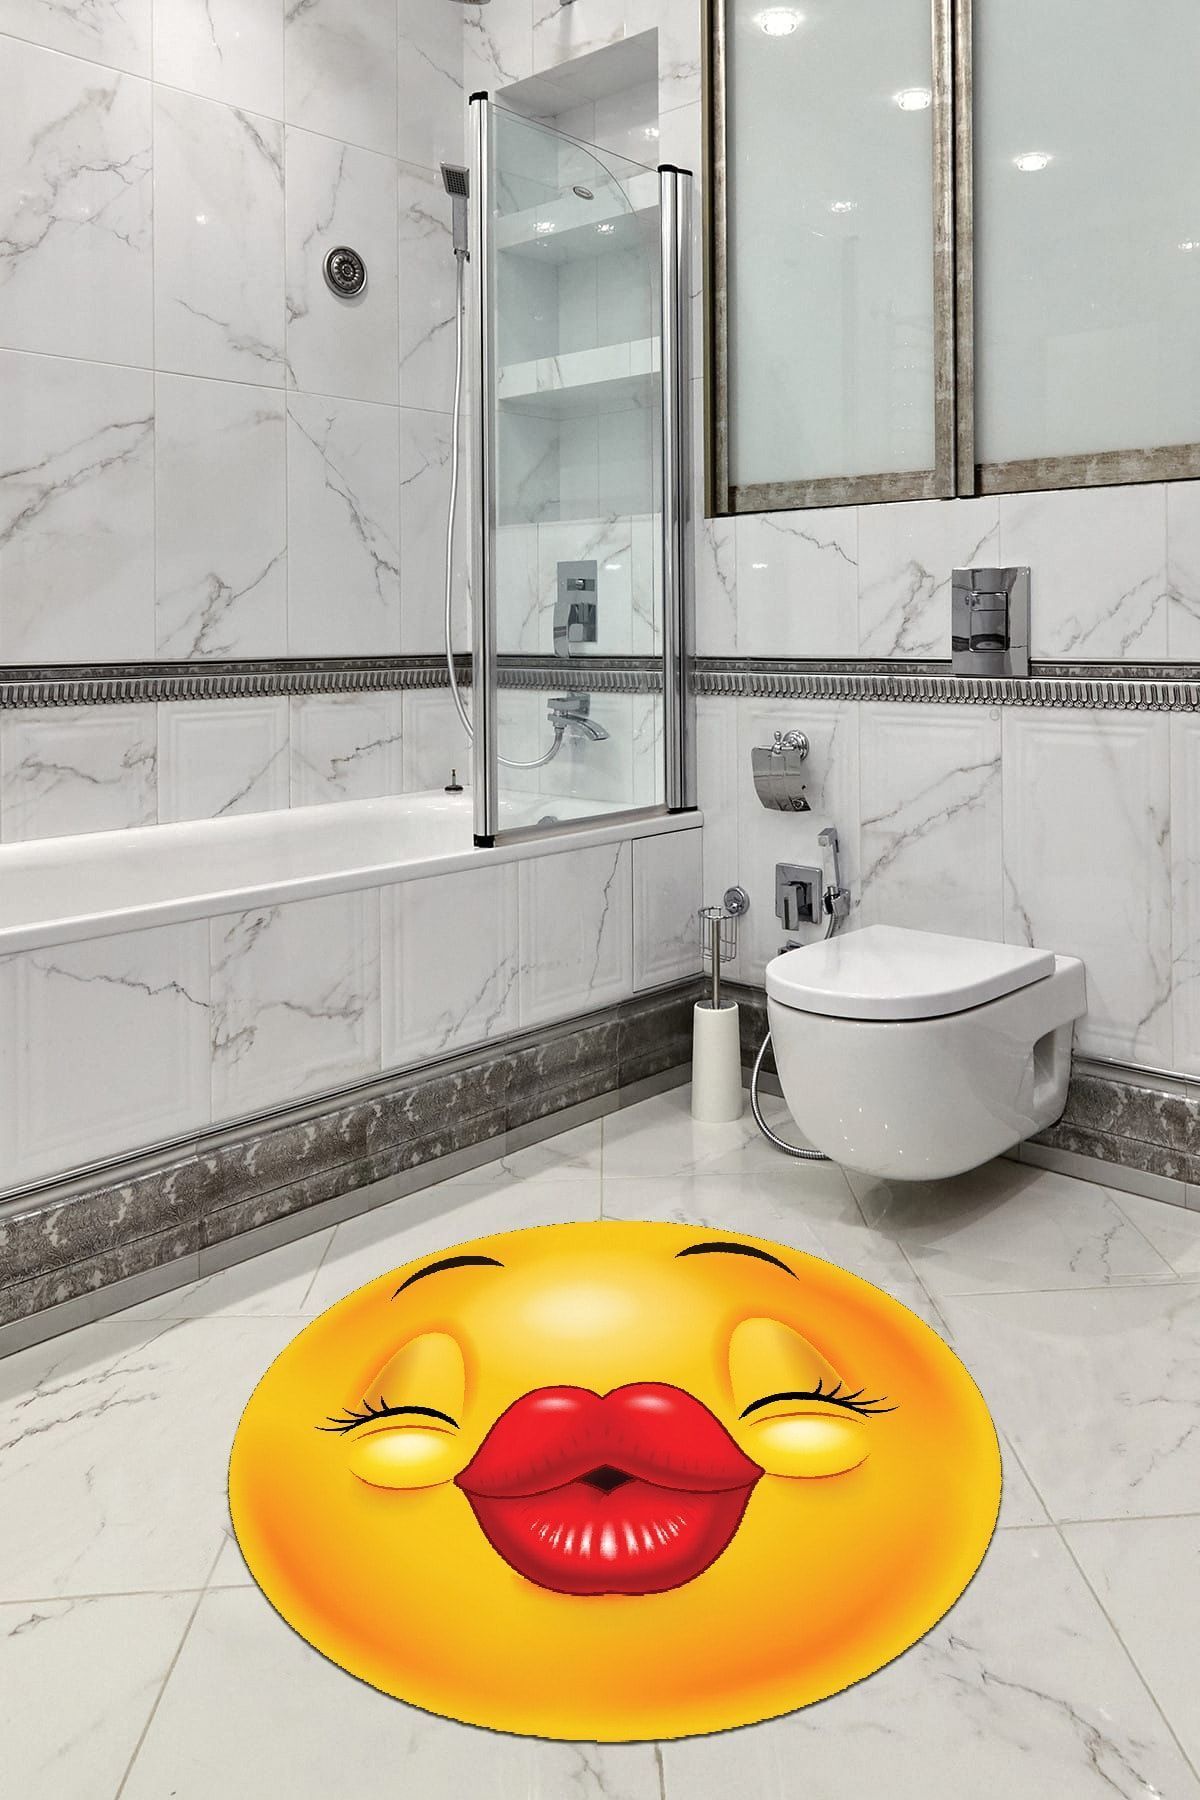 RugViva Kiss Smiley Banyo Kaymaz Tabanlı Paspası Daire 100 x 100 cm